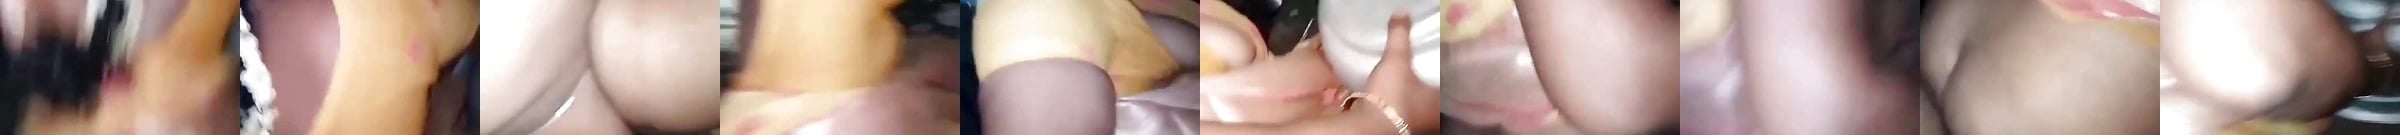 Featured Saree Fingering Porn Videos Xhamster